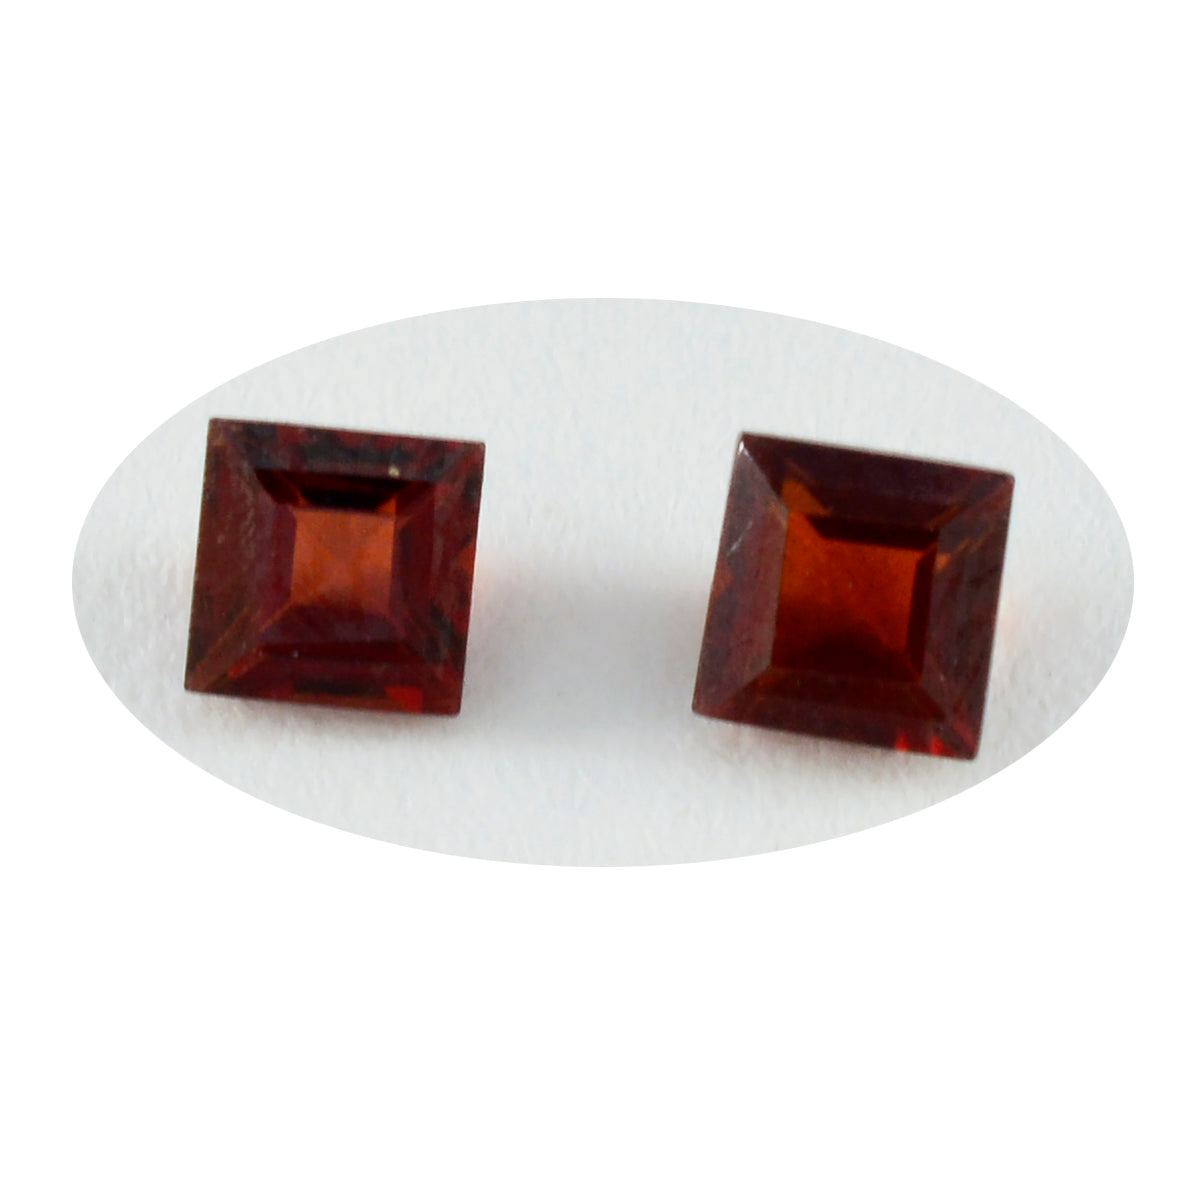 Riyogems 1PC Genuine Red Garnet Faceted 6x6 mm Square Shape beautiful Quality Gems